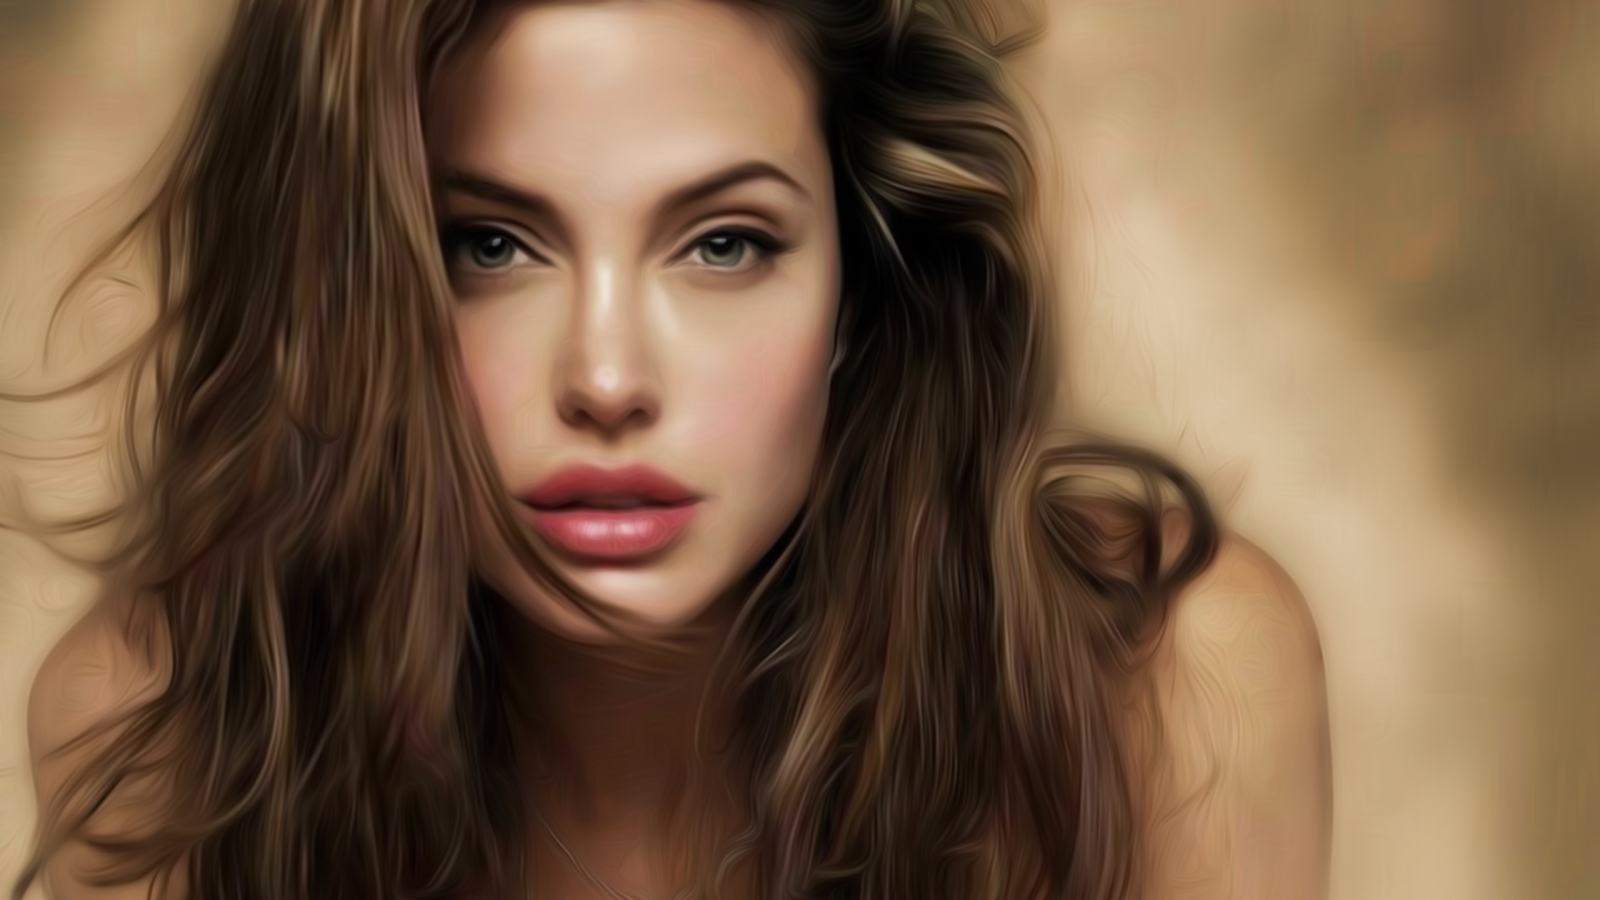 Angelina Jolie Look Art for 1600 x 900 HDTV resolution